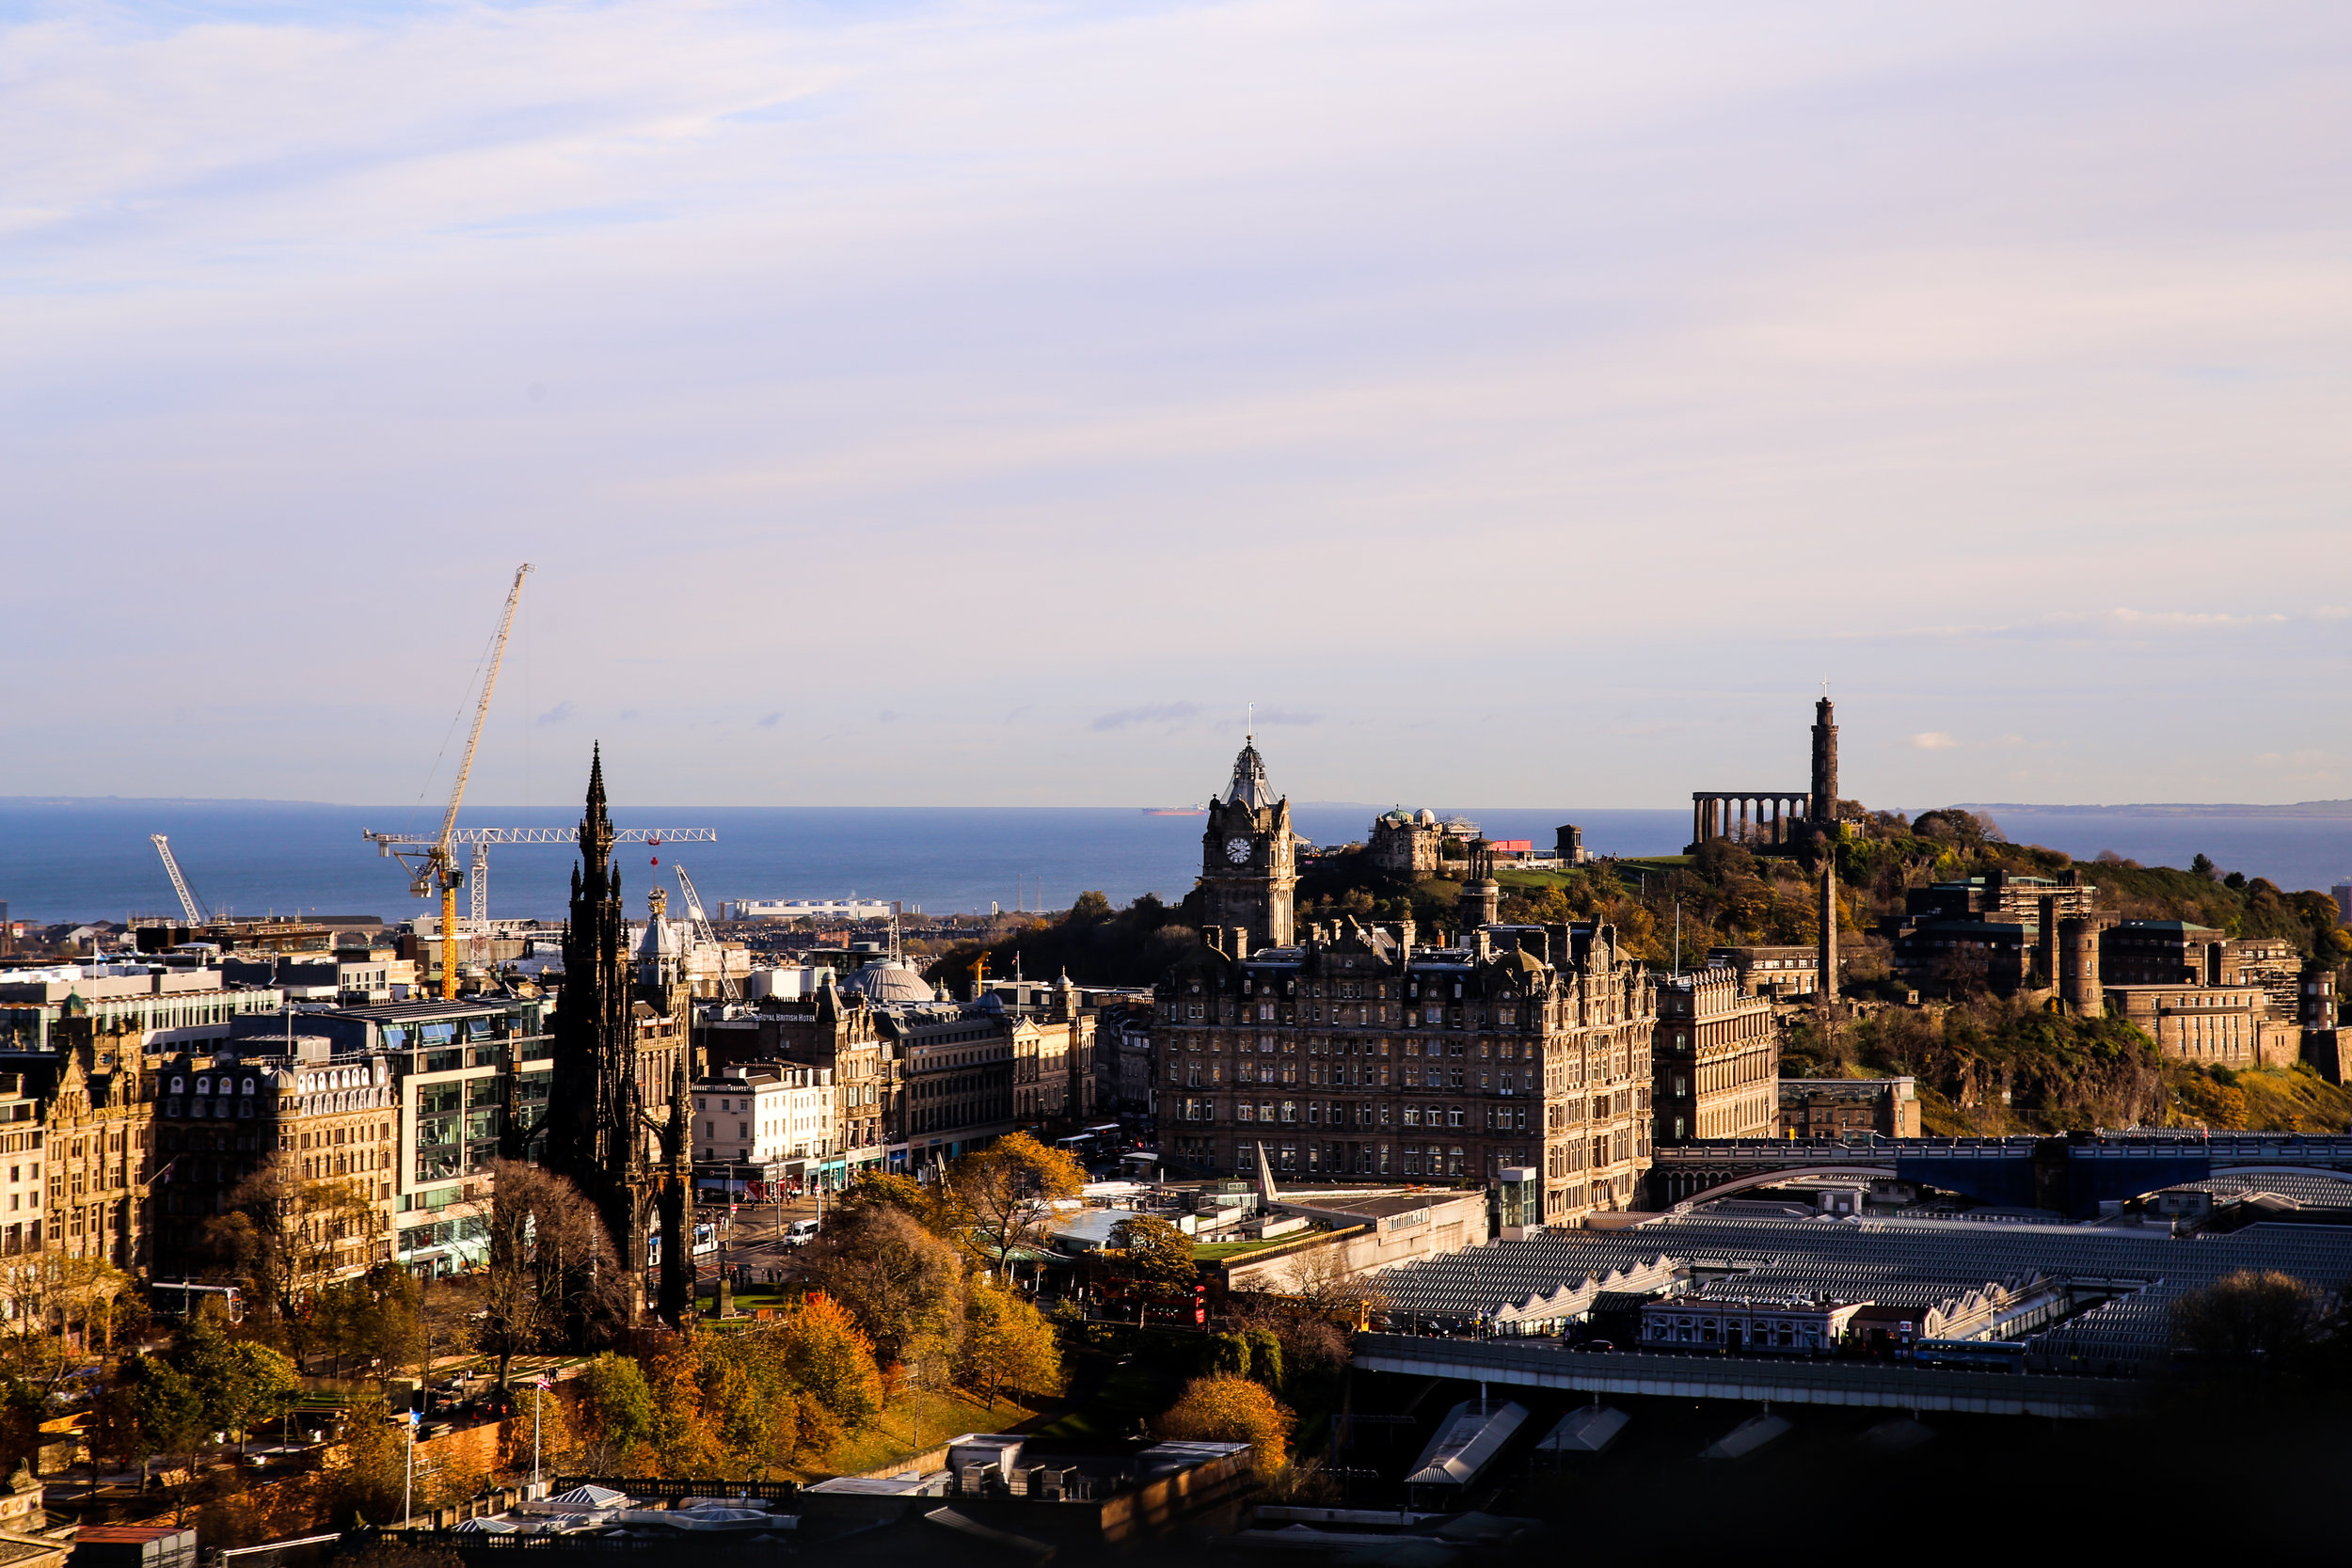 View of Edinburgh overlooking coast